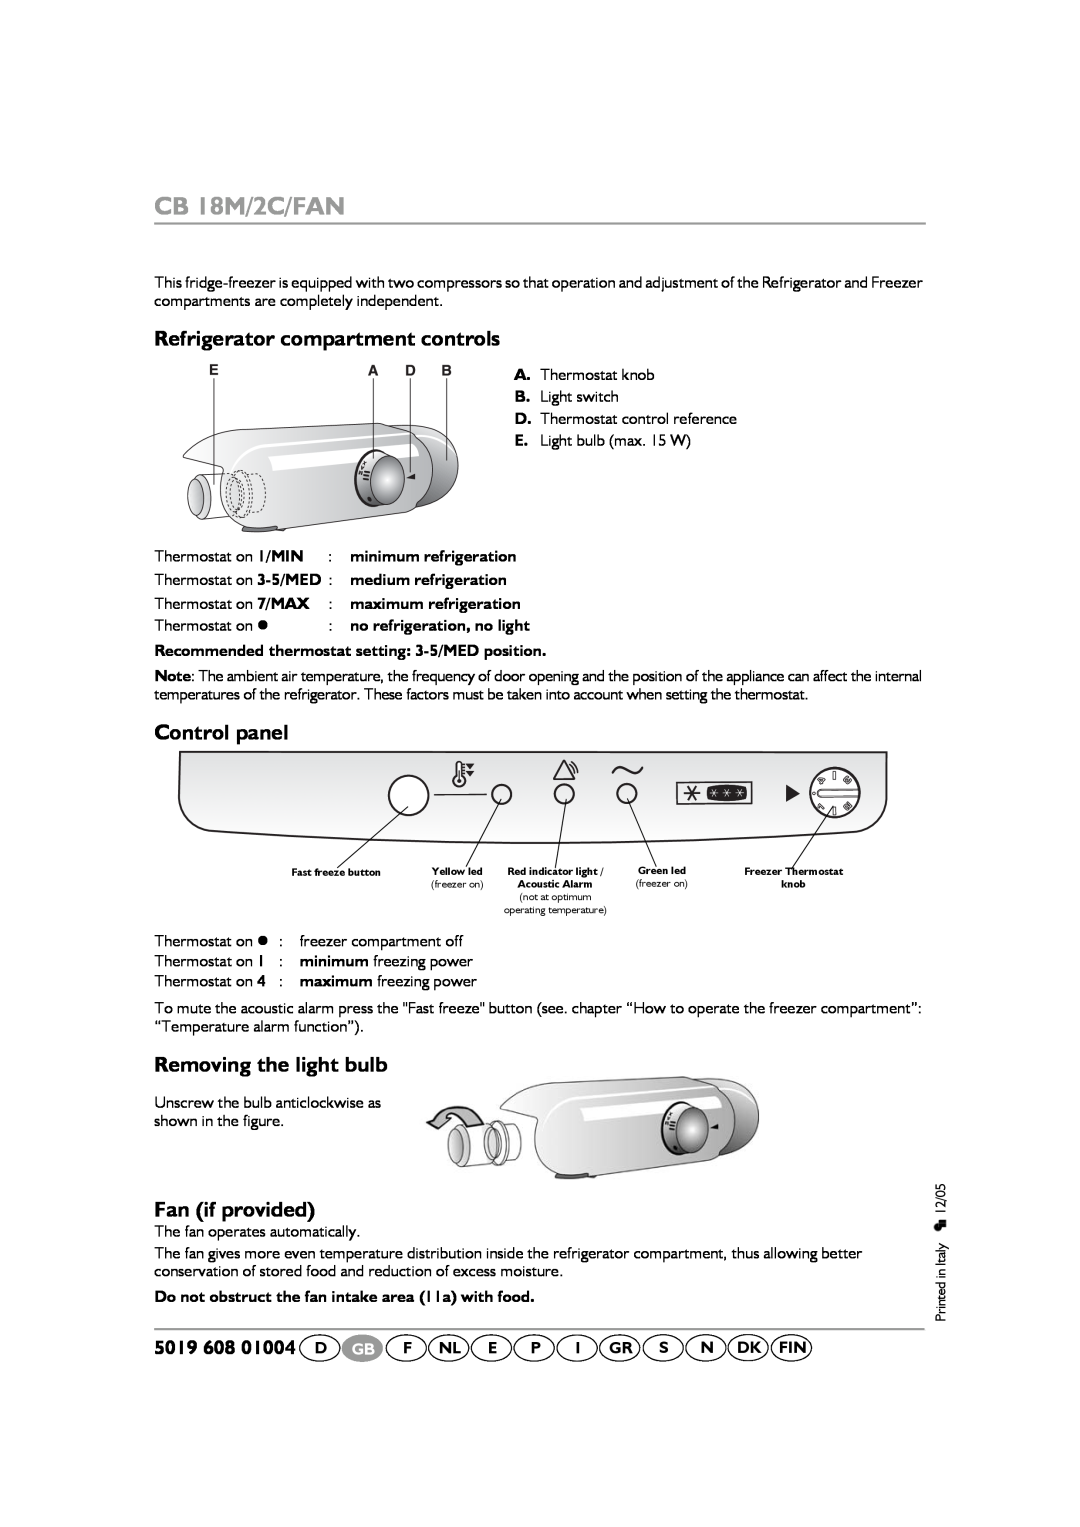 Smeg CR326AP7 Refrigerator compartment controls, Control panel, Removing the light bulb, Fan if provided, CB 18M/2C/FAN 